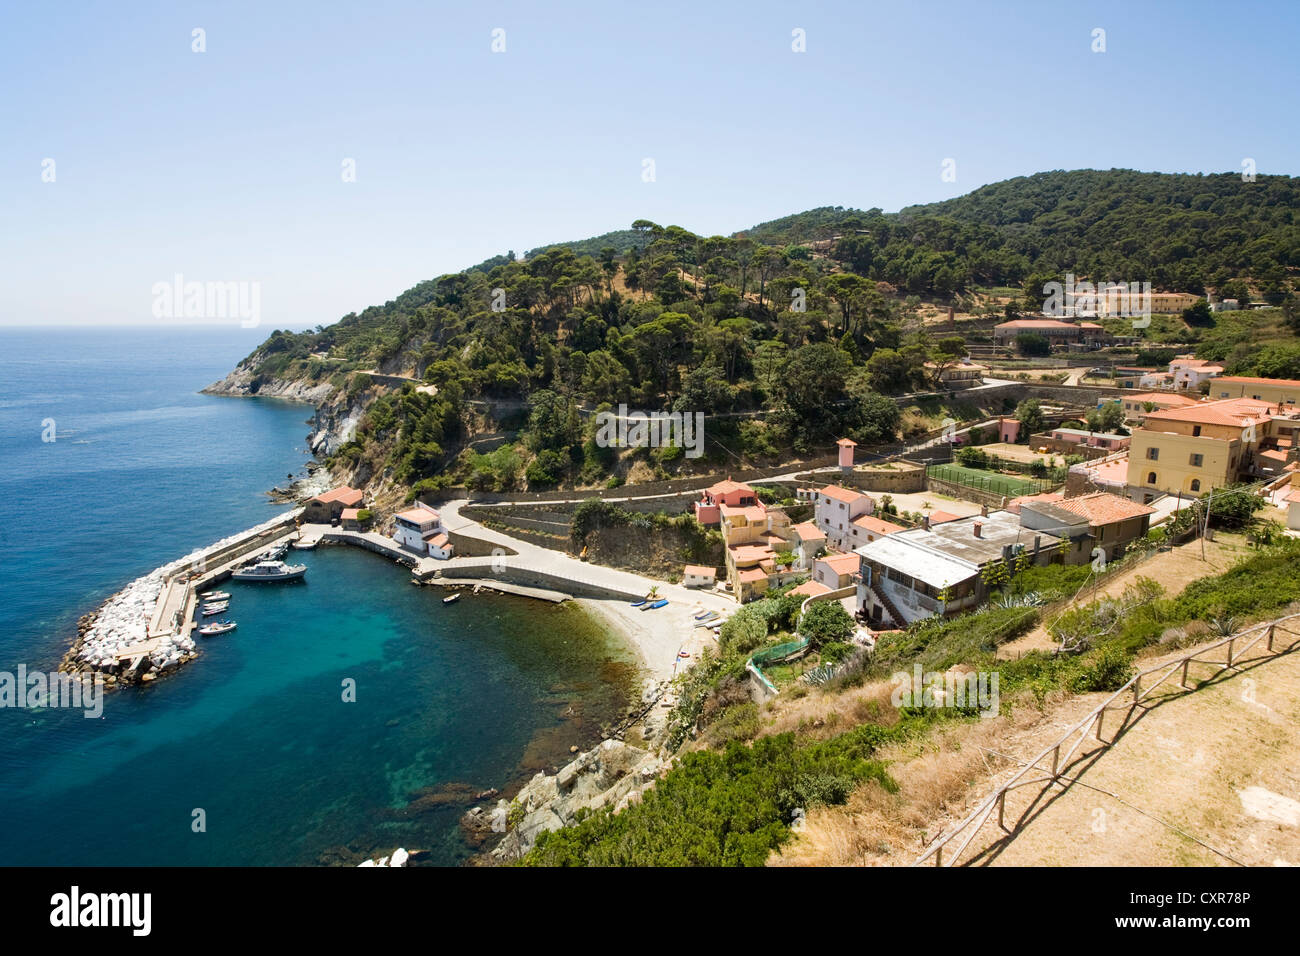 Mit Blick auf den Hafen von dem Gefängnis Insel Isola di Gorgona, Penitenziario Isola di Gorgona, Toskana, Italien, Europa Stockfoto